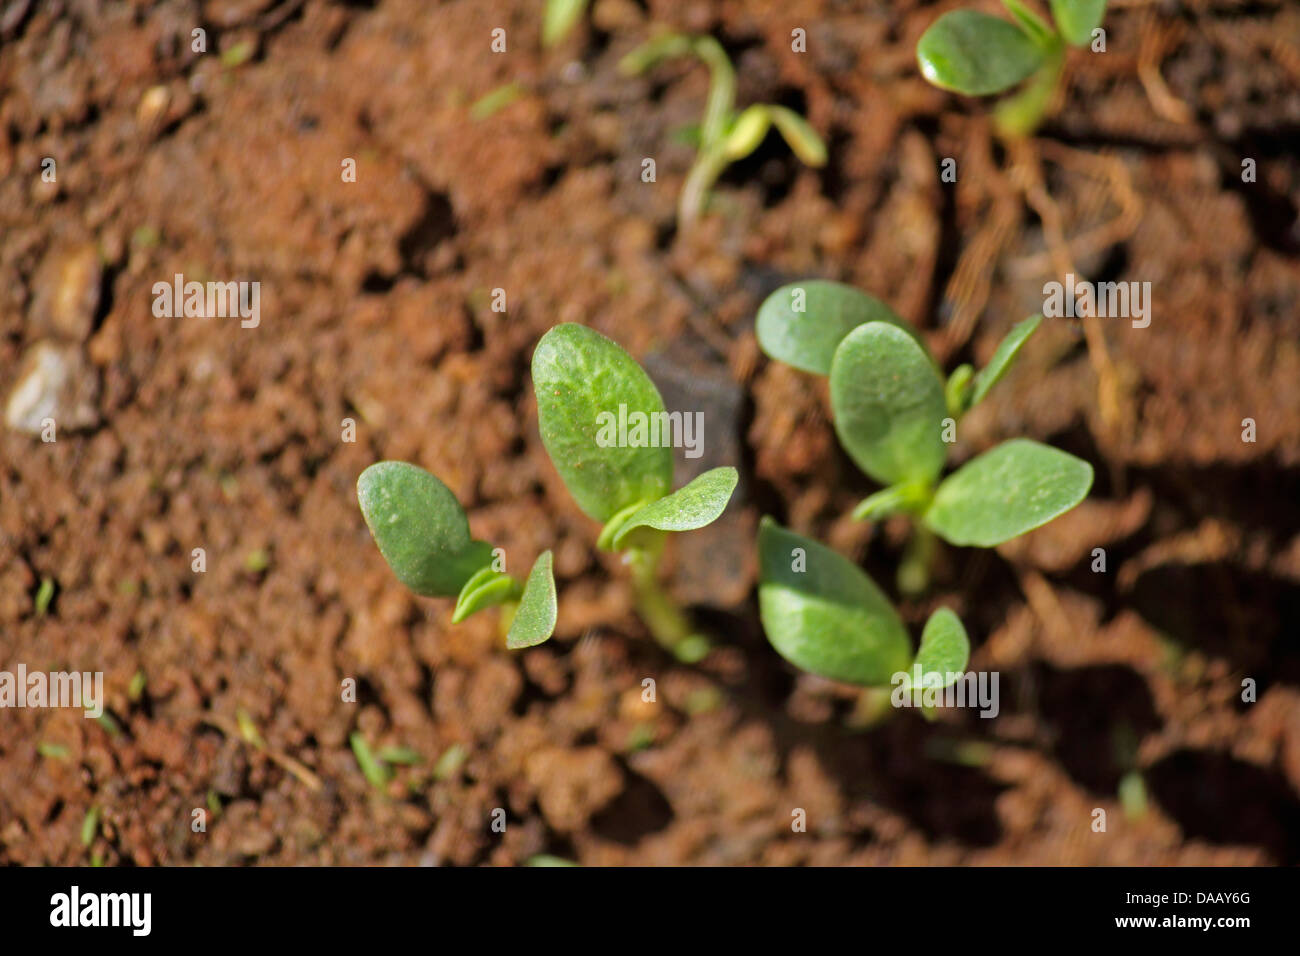 Young Plants of Fenugreek Foenum-graecum Stock Photo